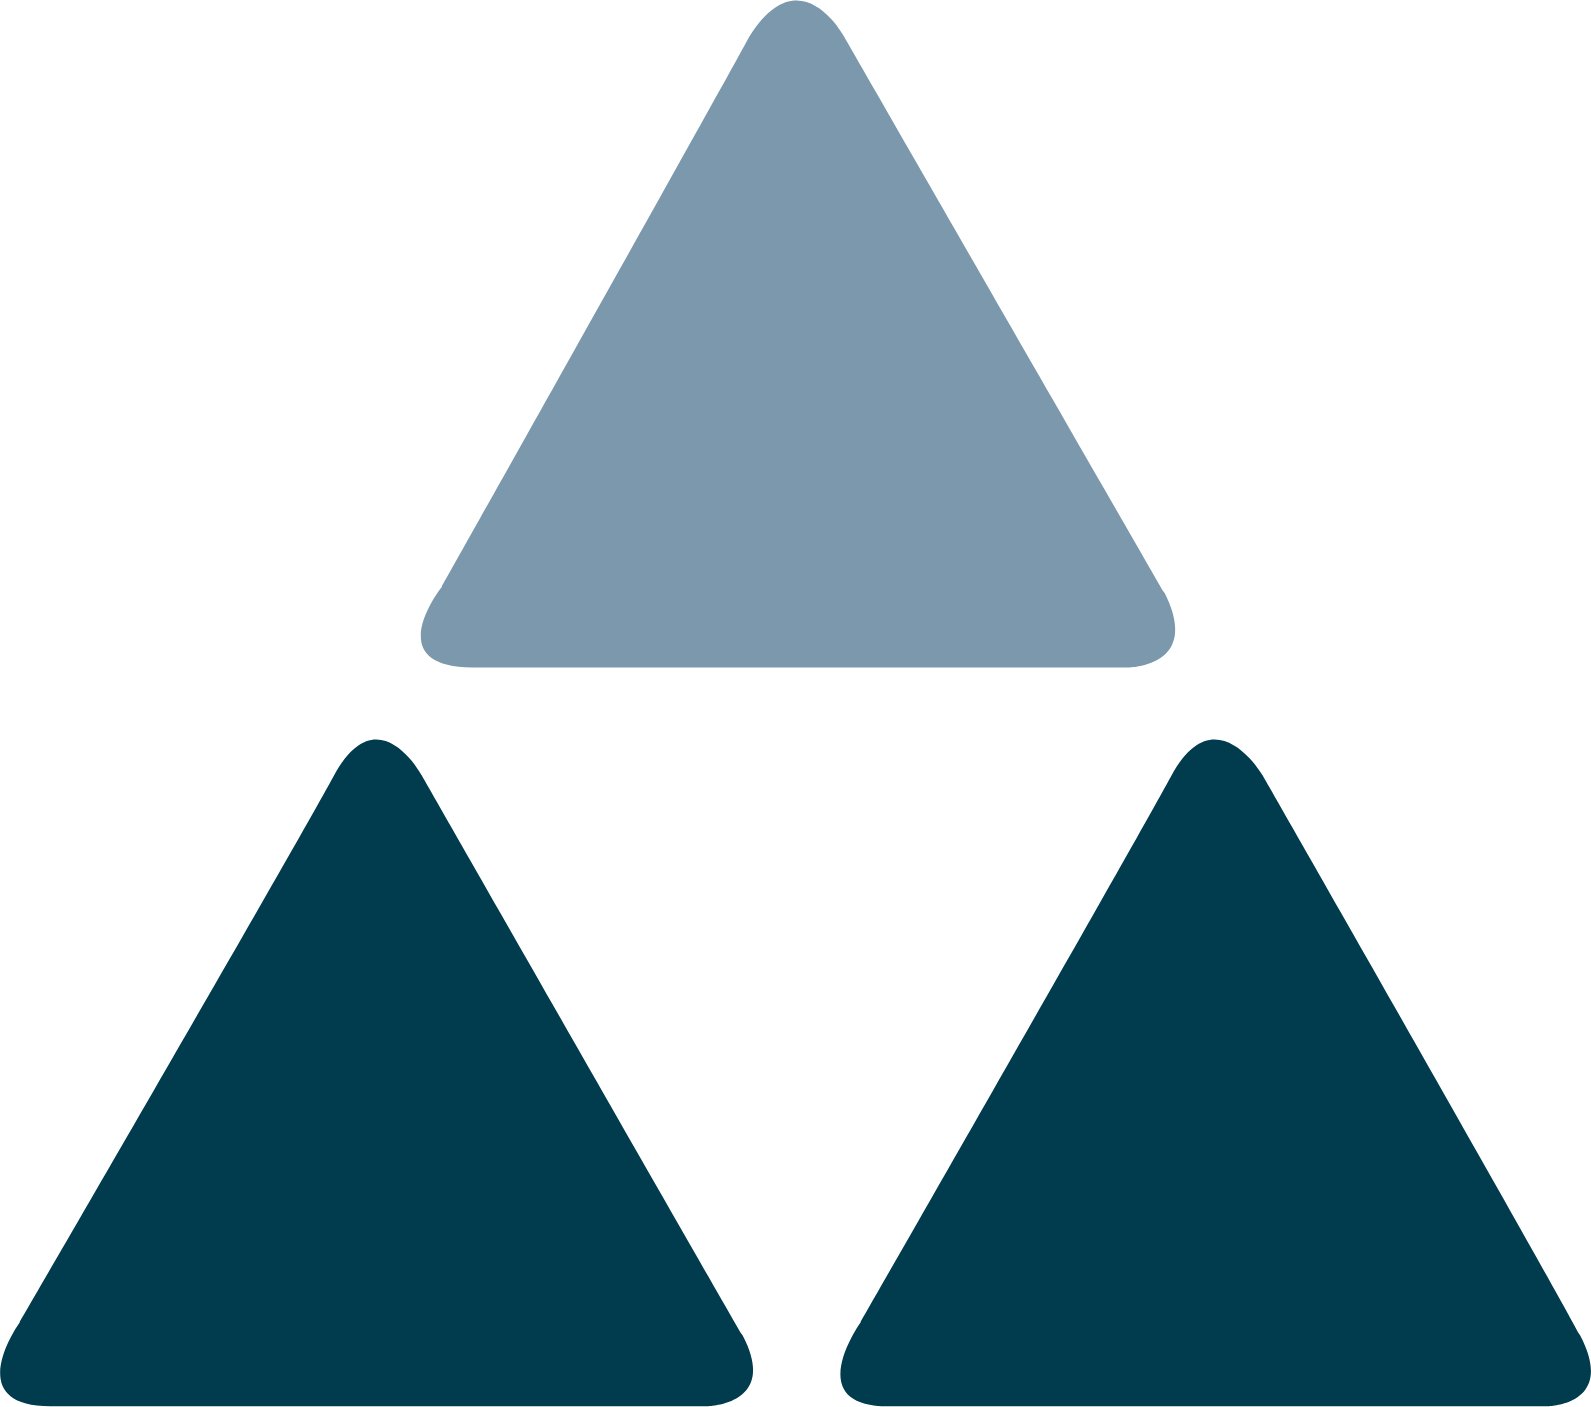 Tritax Big Box REIT logo (PNG transparent)